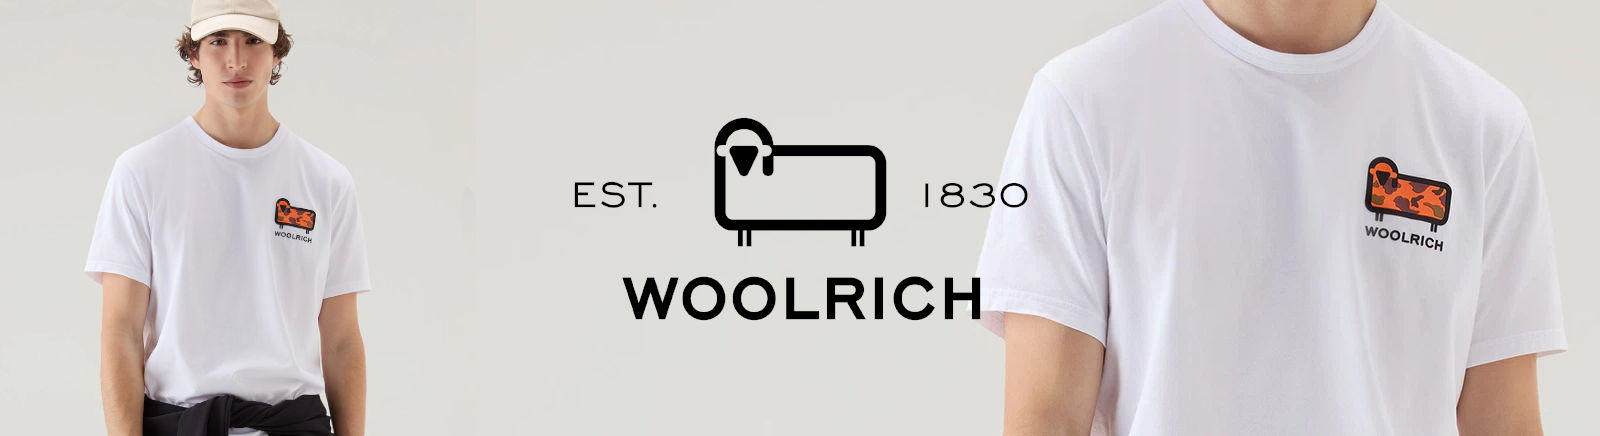 Woolrich Slipper online shoppen im Prange Schuhe Shop